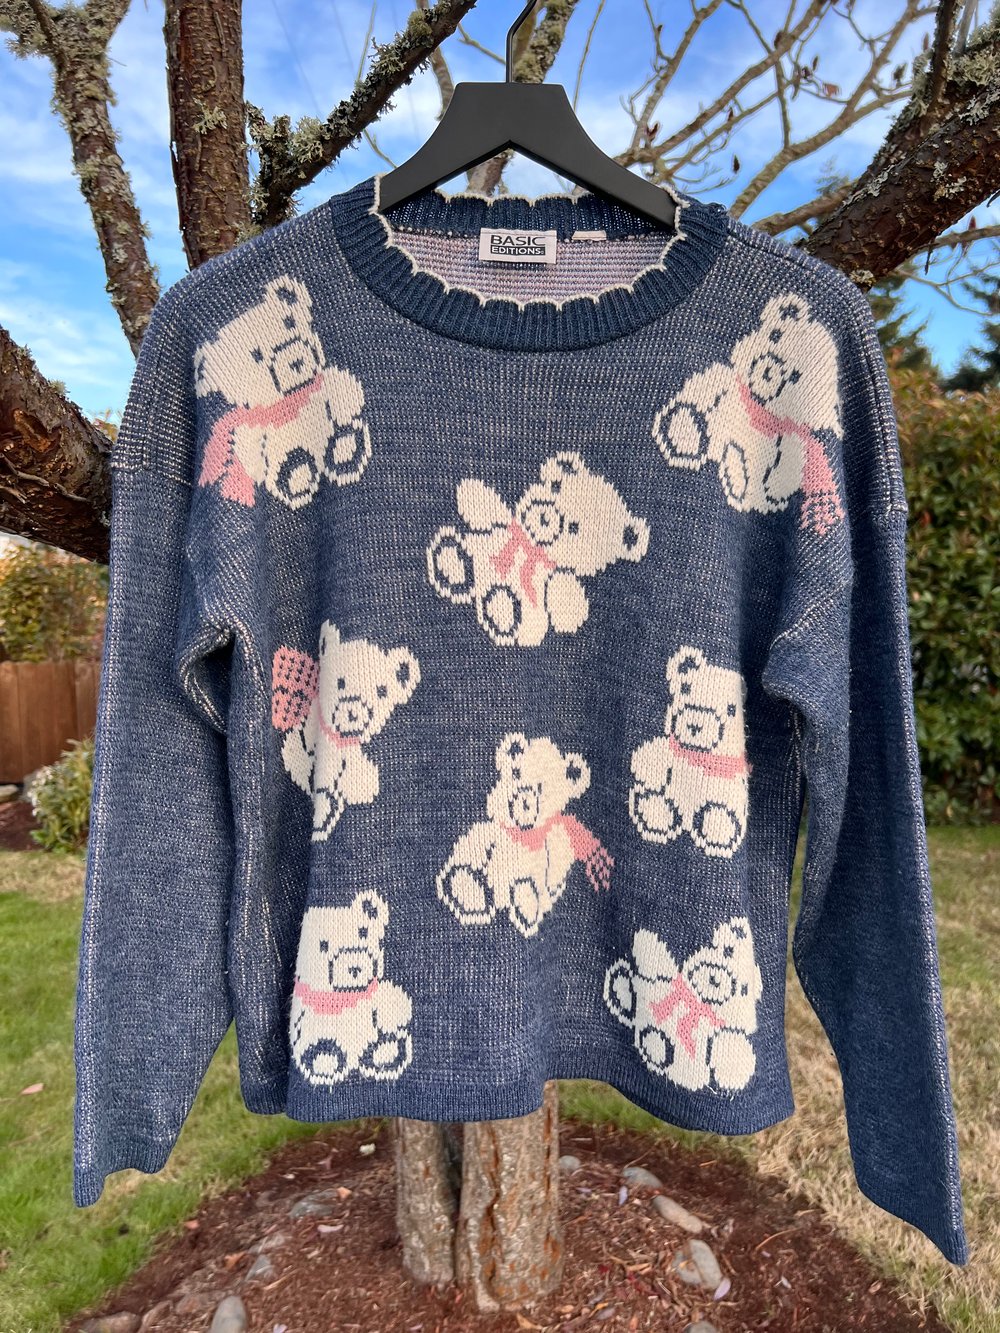 Vintage Basic Editions Teddy Bear Sweater (M)